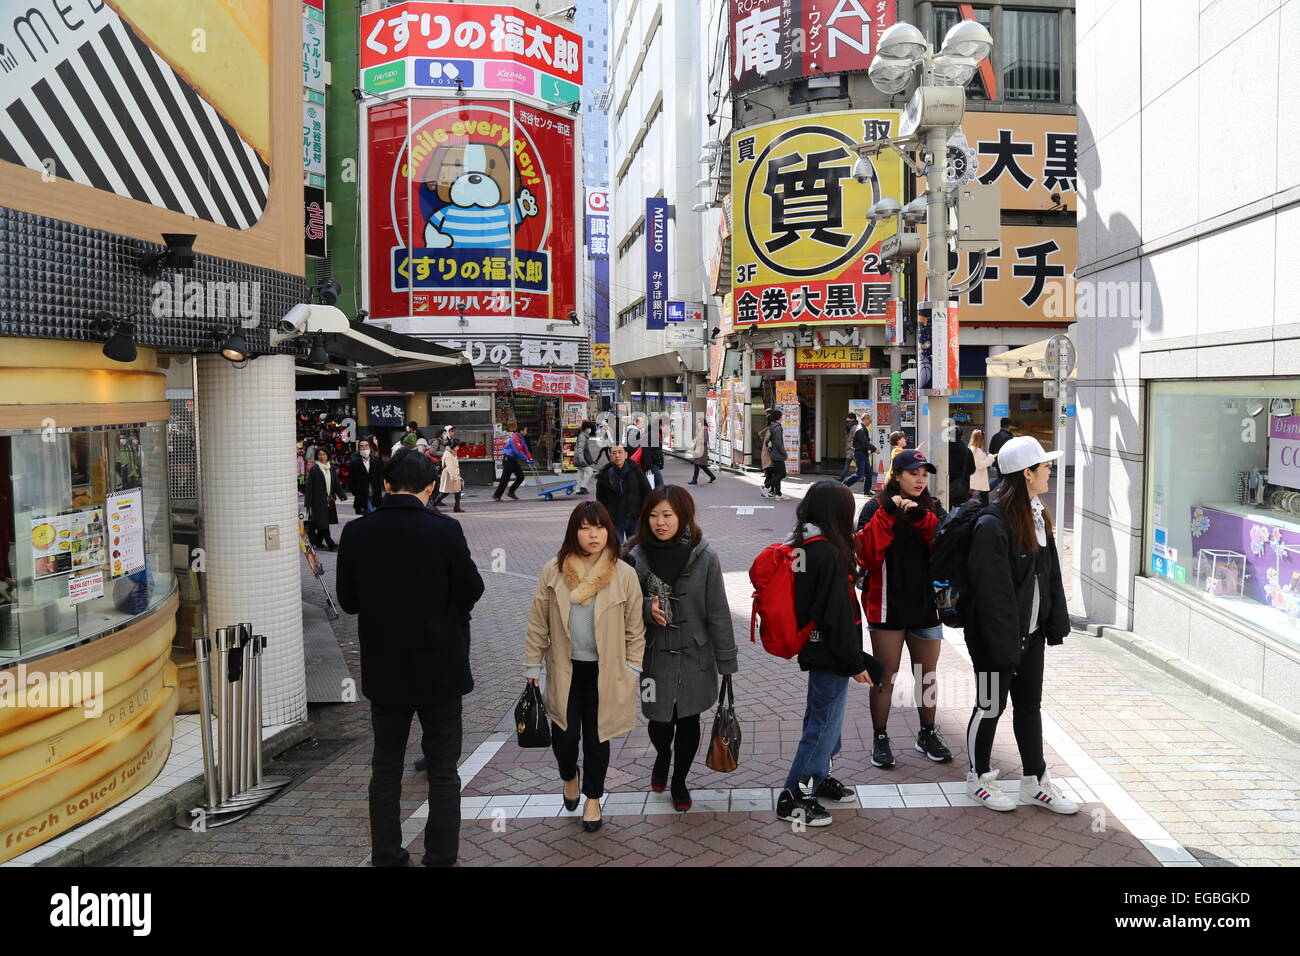 Japanese people walking and shopping in Shibuya, Japan. Stock Photo